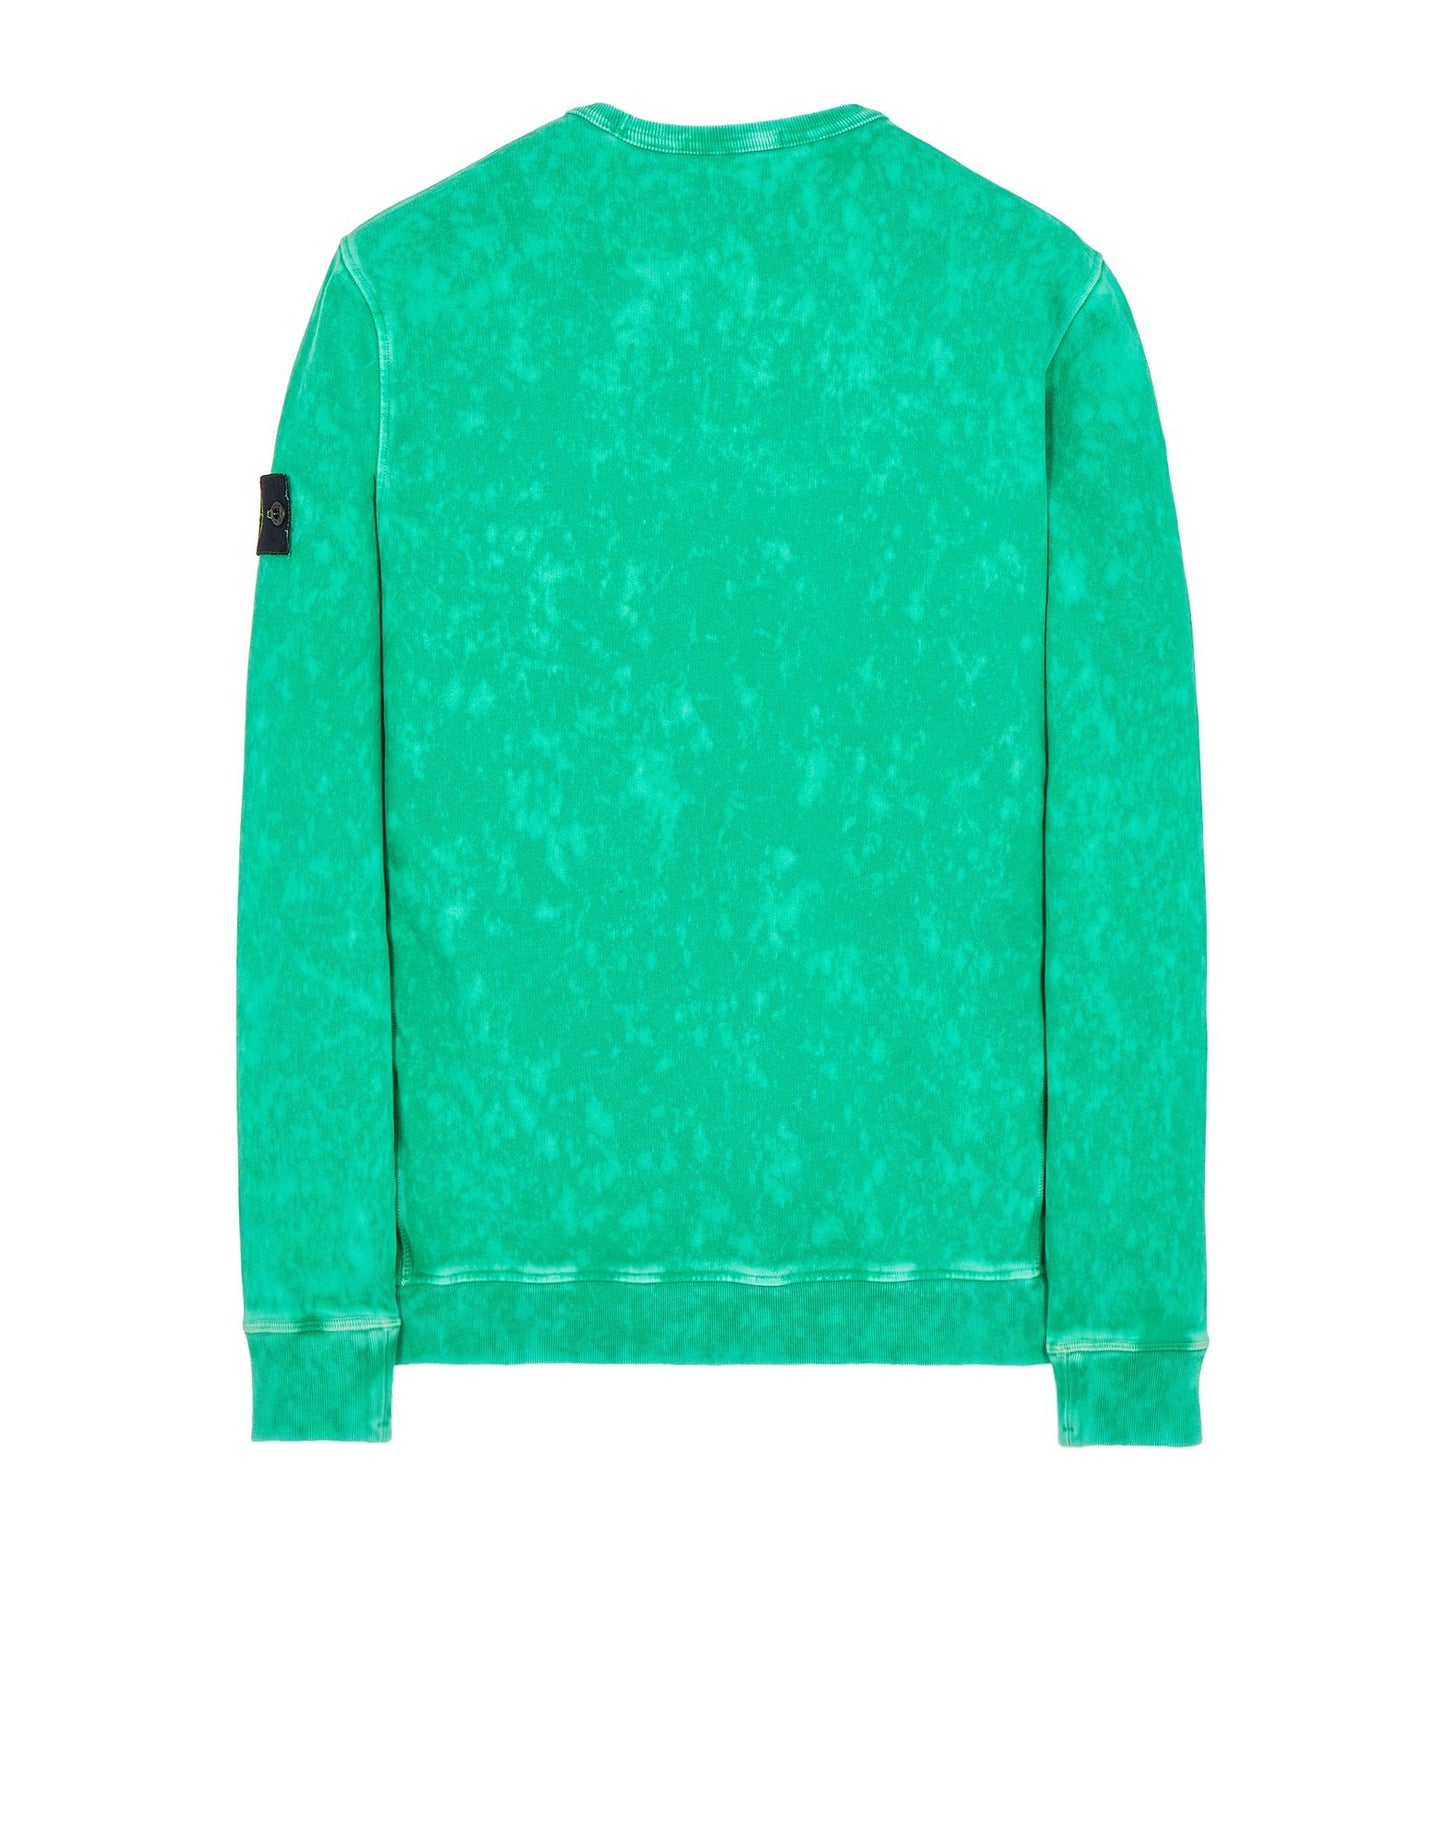 Stone Island Garment Dyed Crewneck Sweatshirt